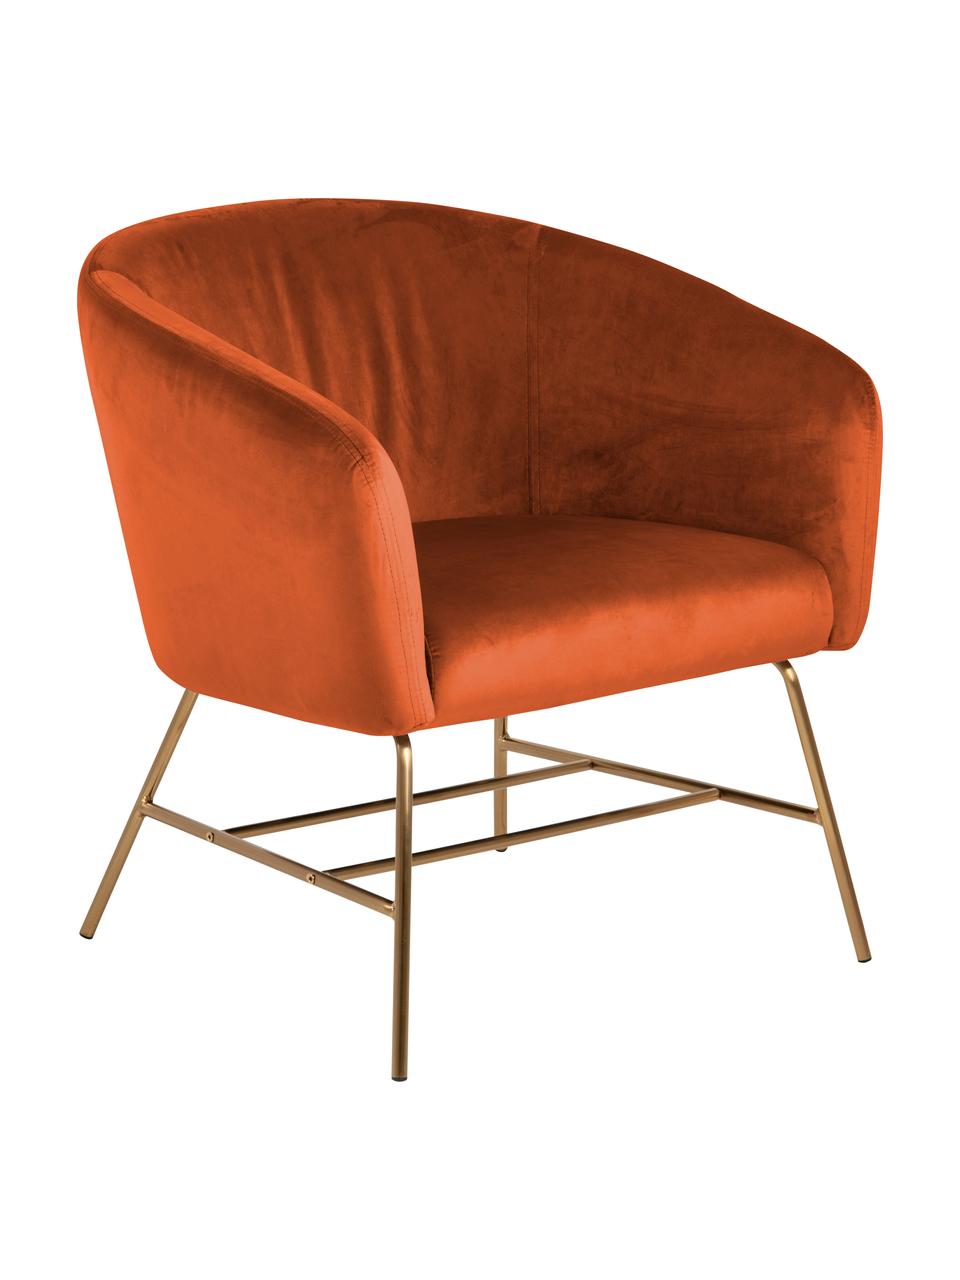 Moderne fluwelen fauteuil Ramsey in koperkleur, Bekleding: polyester fluweel, Poten: gelakt metaal, Fluweel koperkleurig, B 72 x D 67 cm